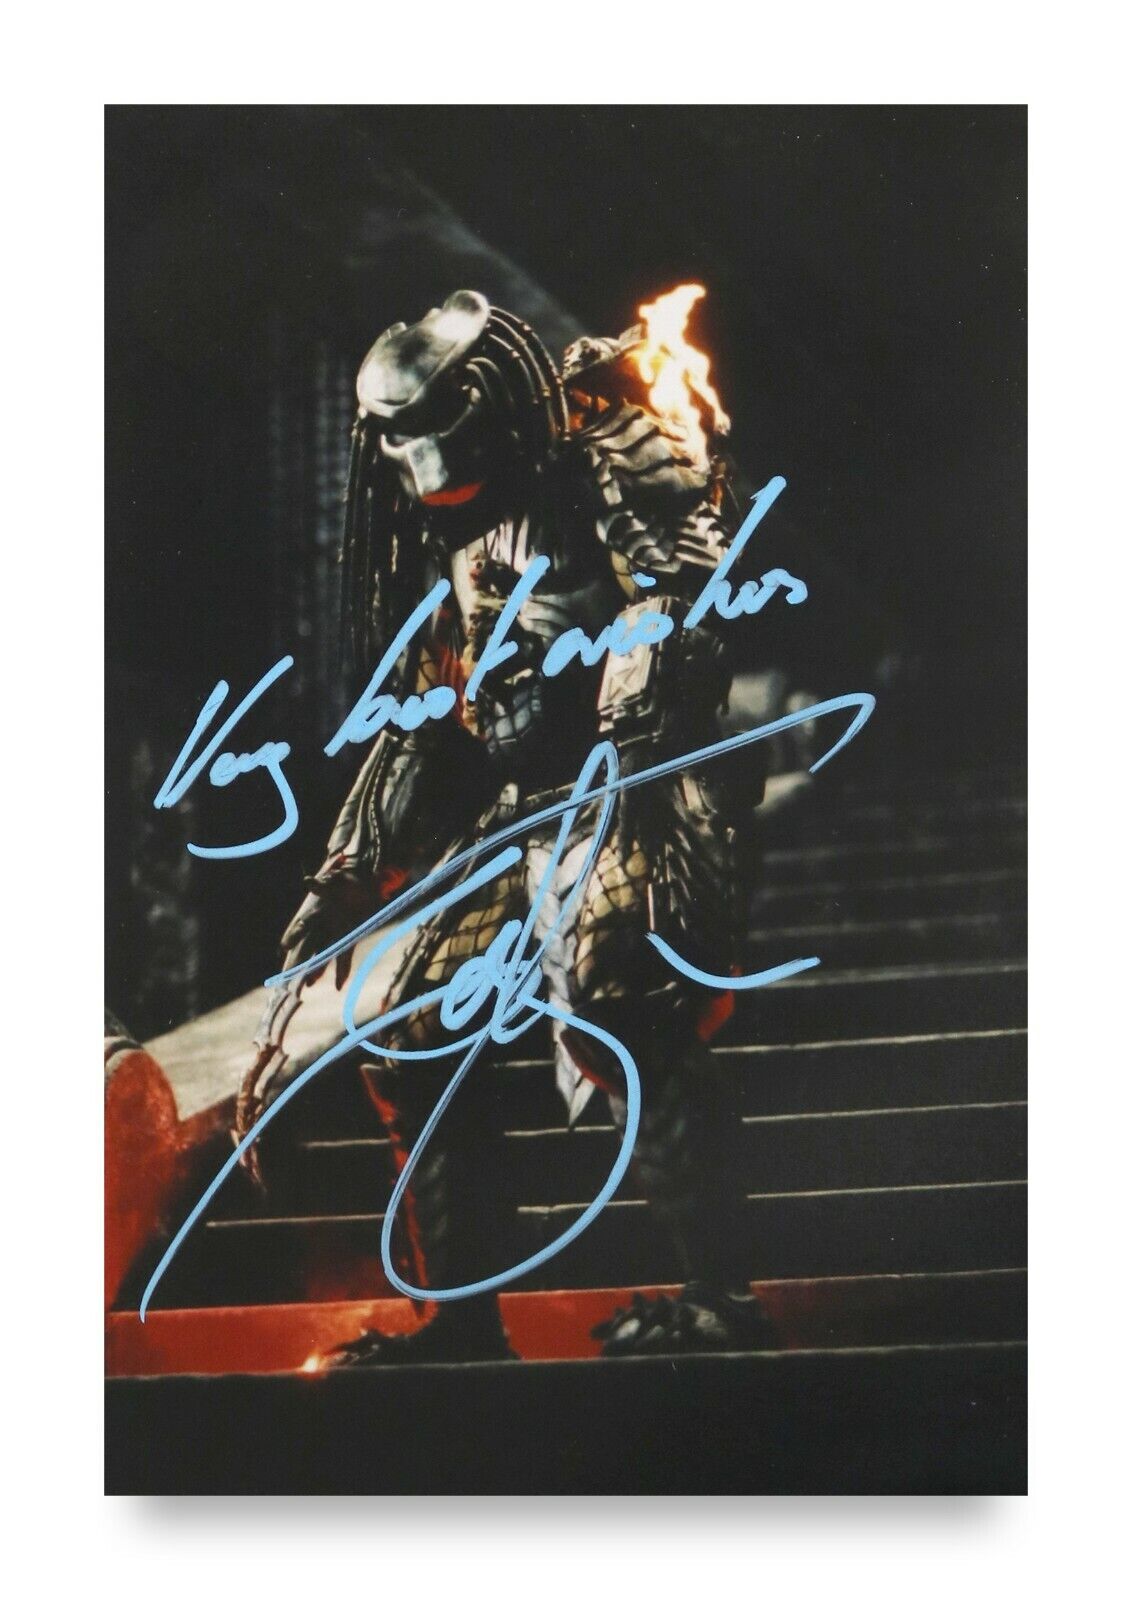 Ian Whyte Signed 6x4 Photo Poster painting Alien Vs. Predator GOT Autograph Memorabilia + COA